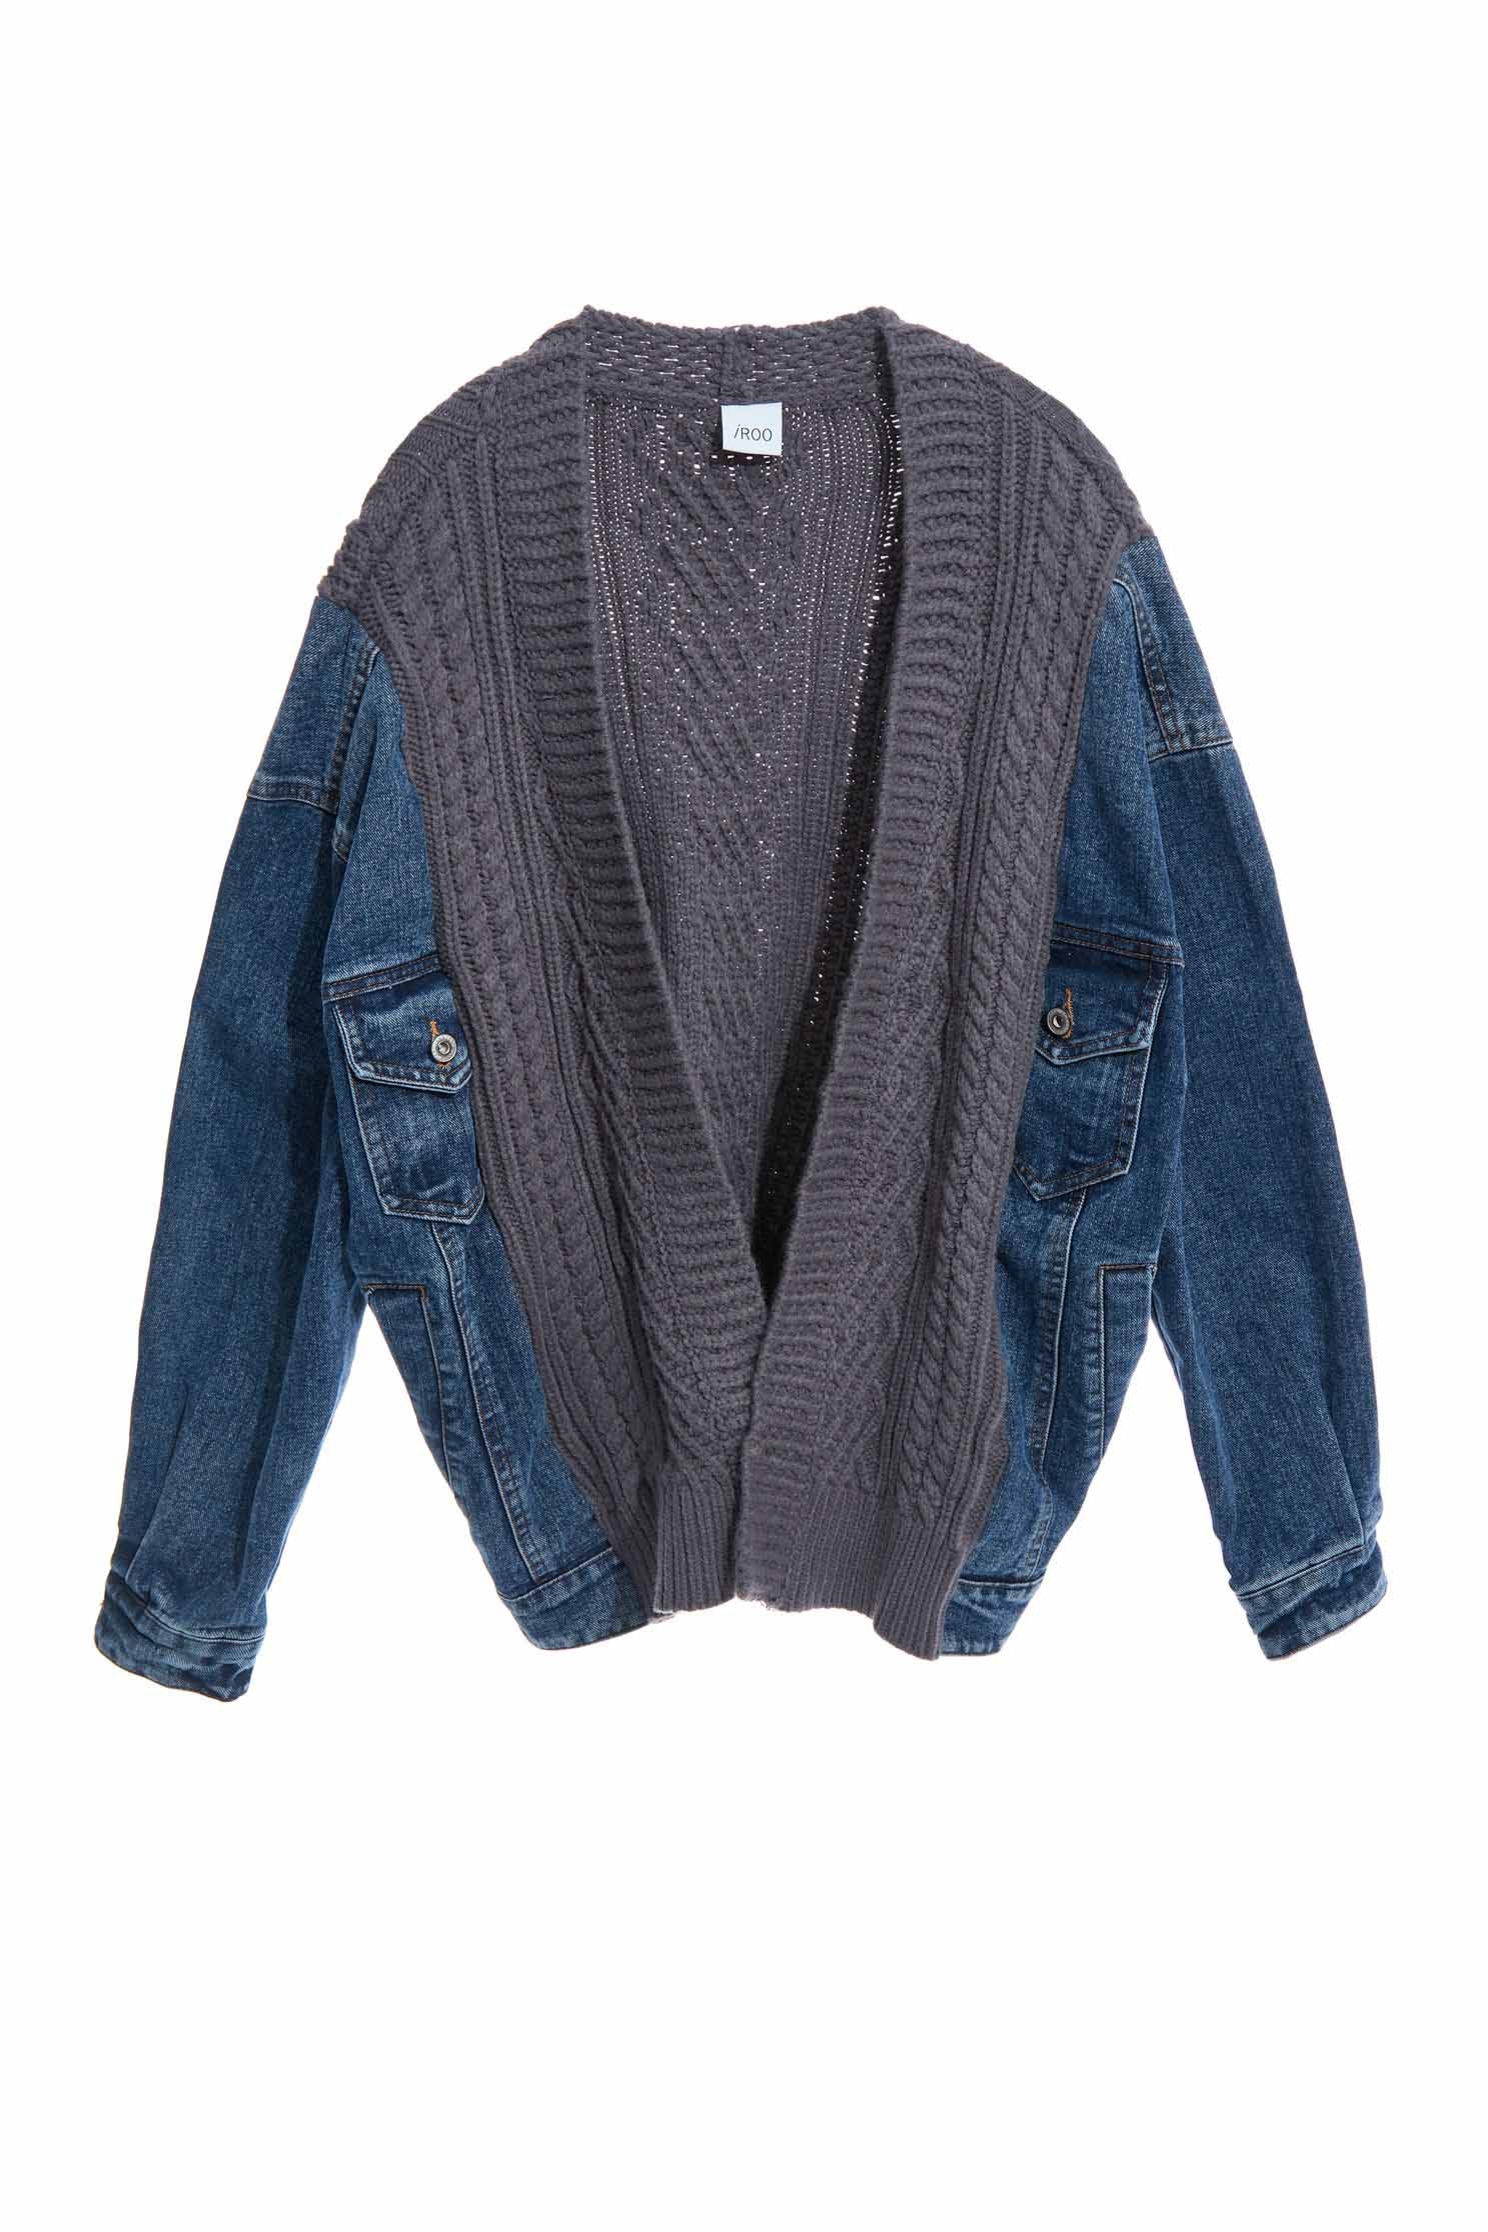 Knit contrast  denim jacket,Jackets,Ready for Winter,Outerwear,Denim,Denim Jaackets,Season (AW) Look,Knitted